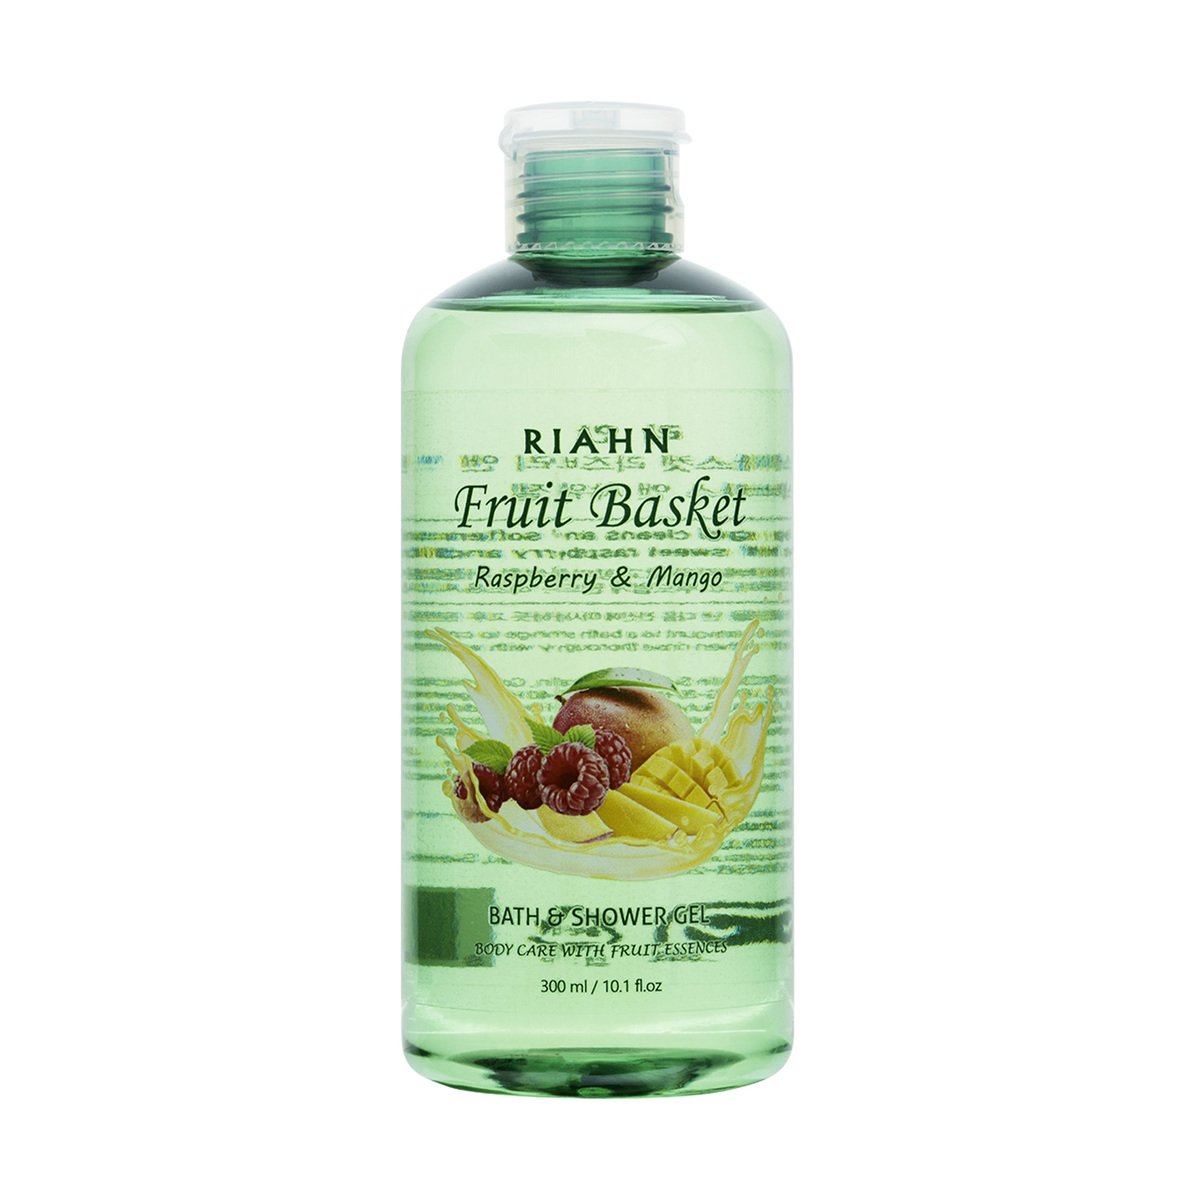 Riahn Fruit Basket Raspberry & Mango Bath & Shower Gel Bottle 300ml